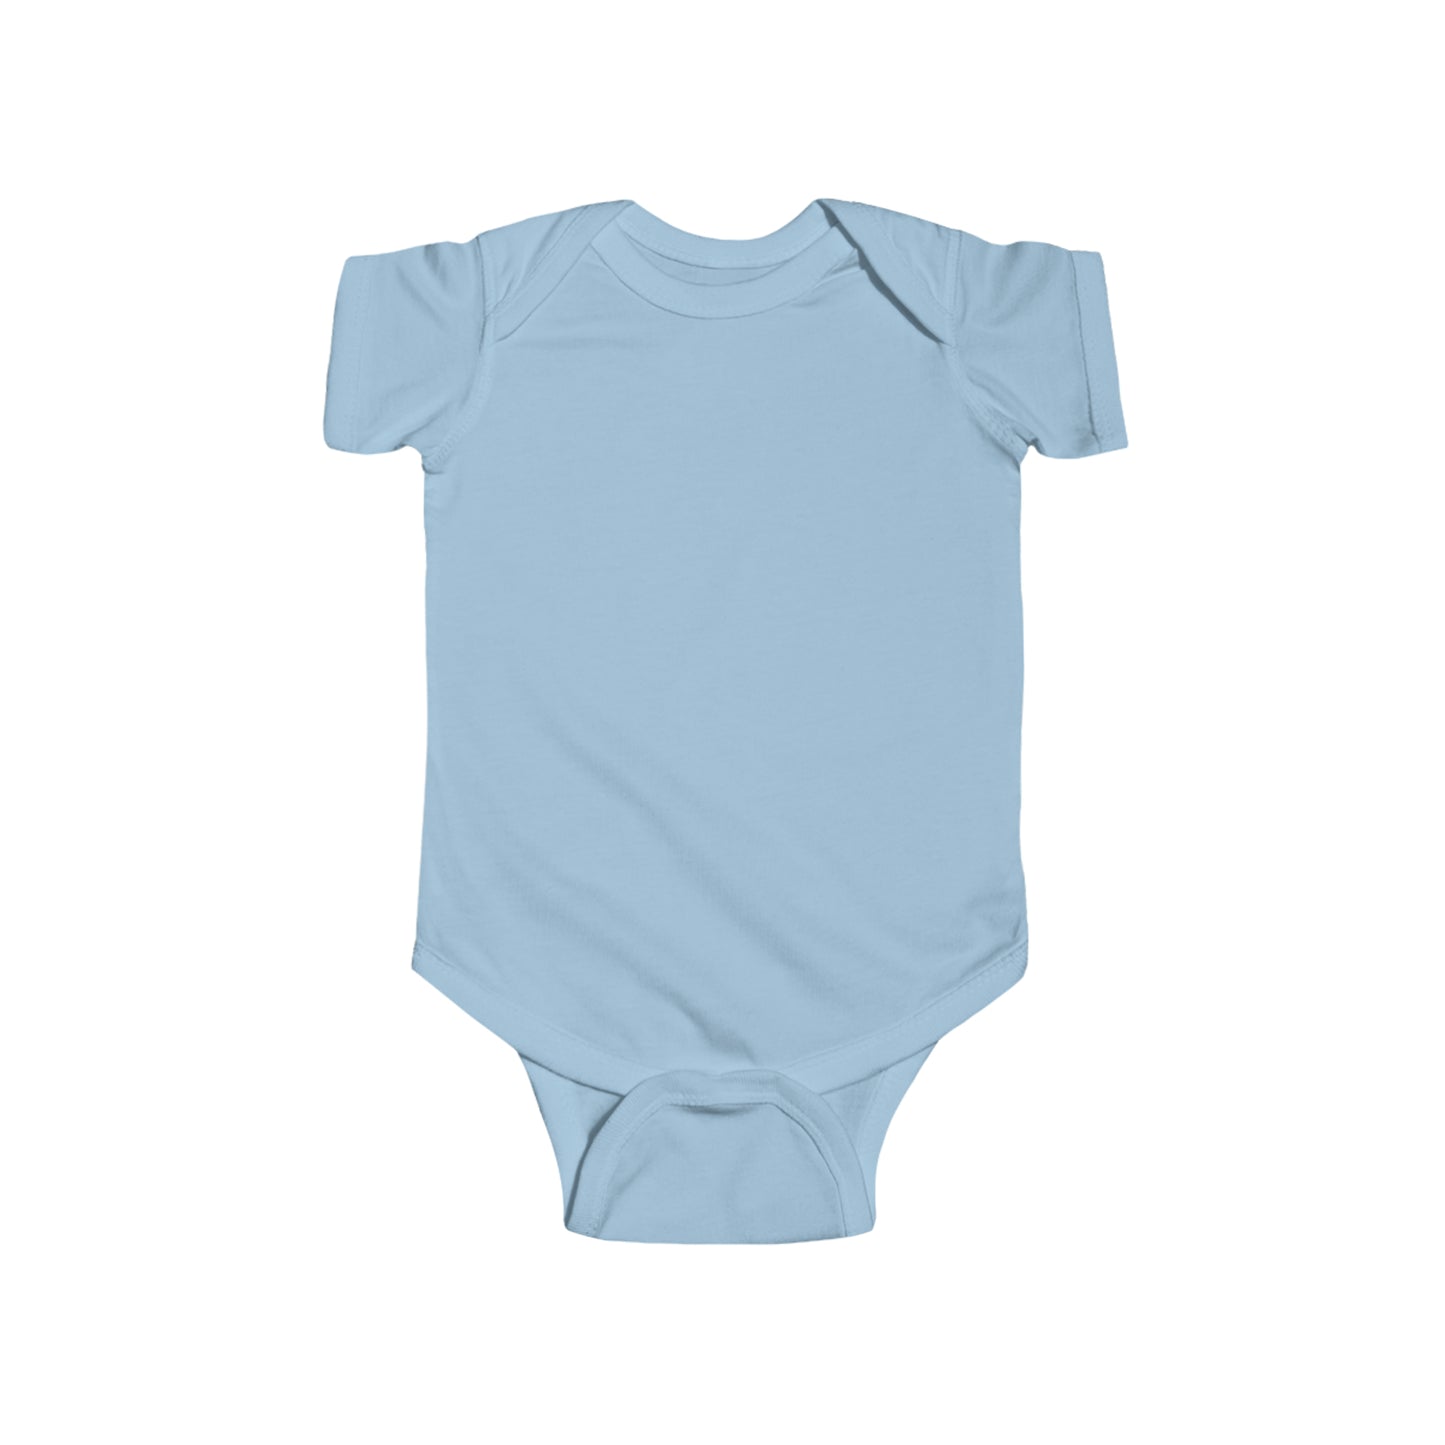 YEG Infant Fine Jersey Bodysuit (logo on back)